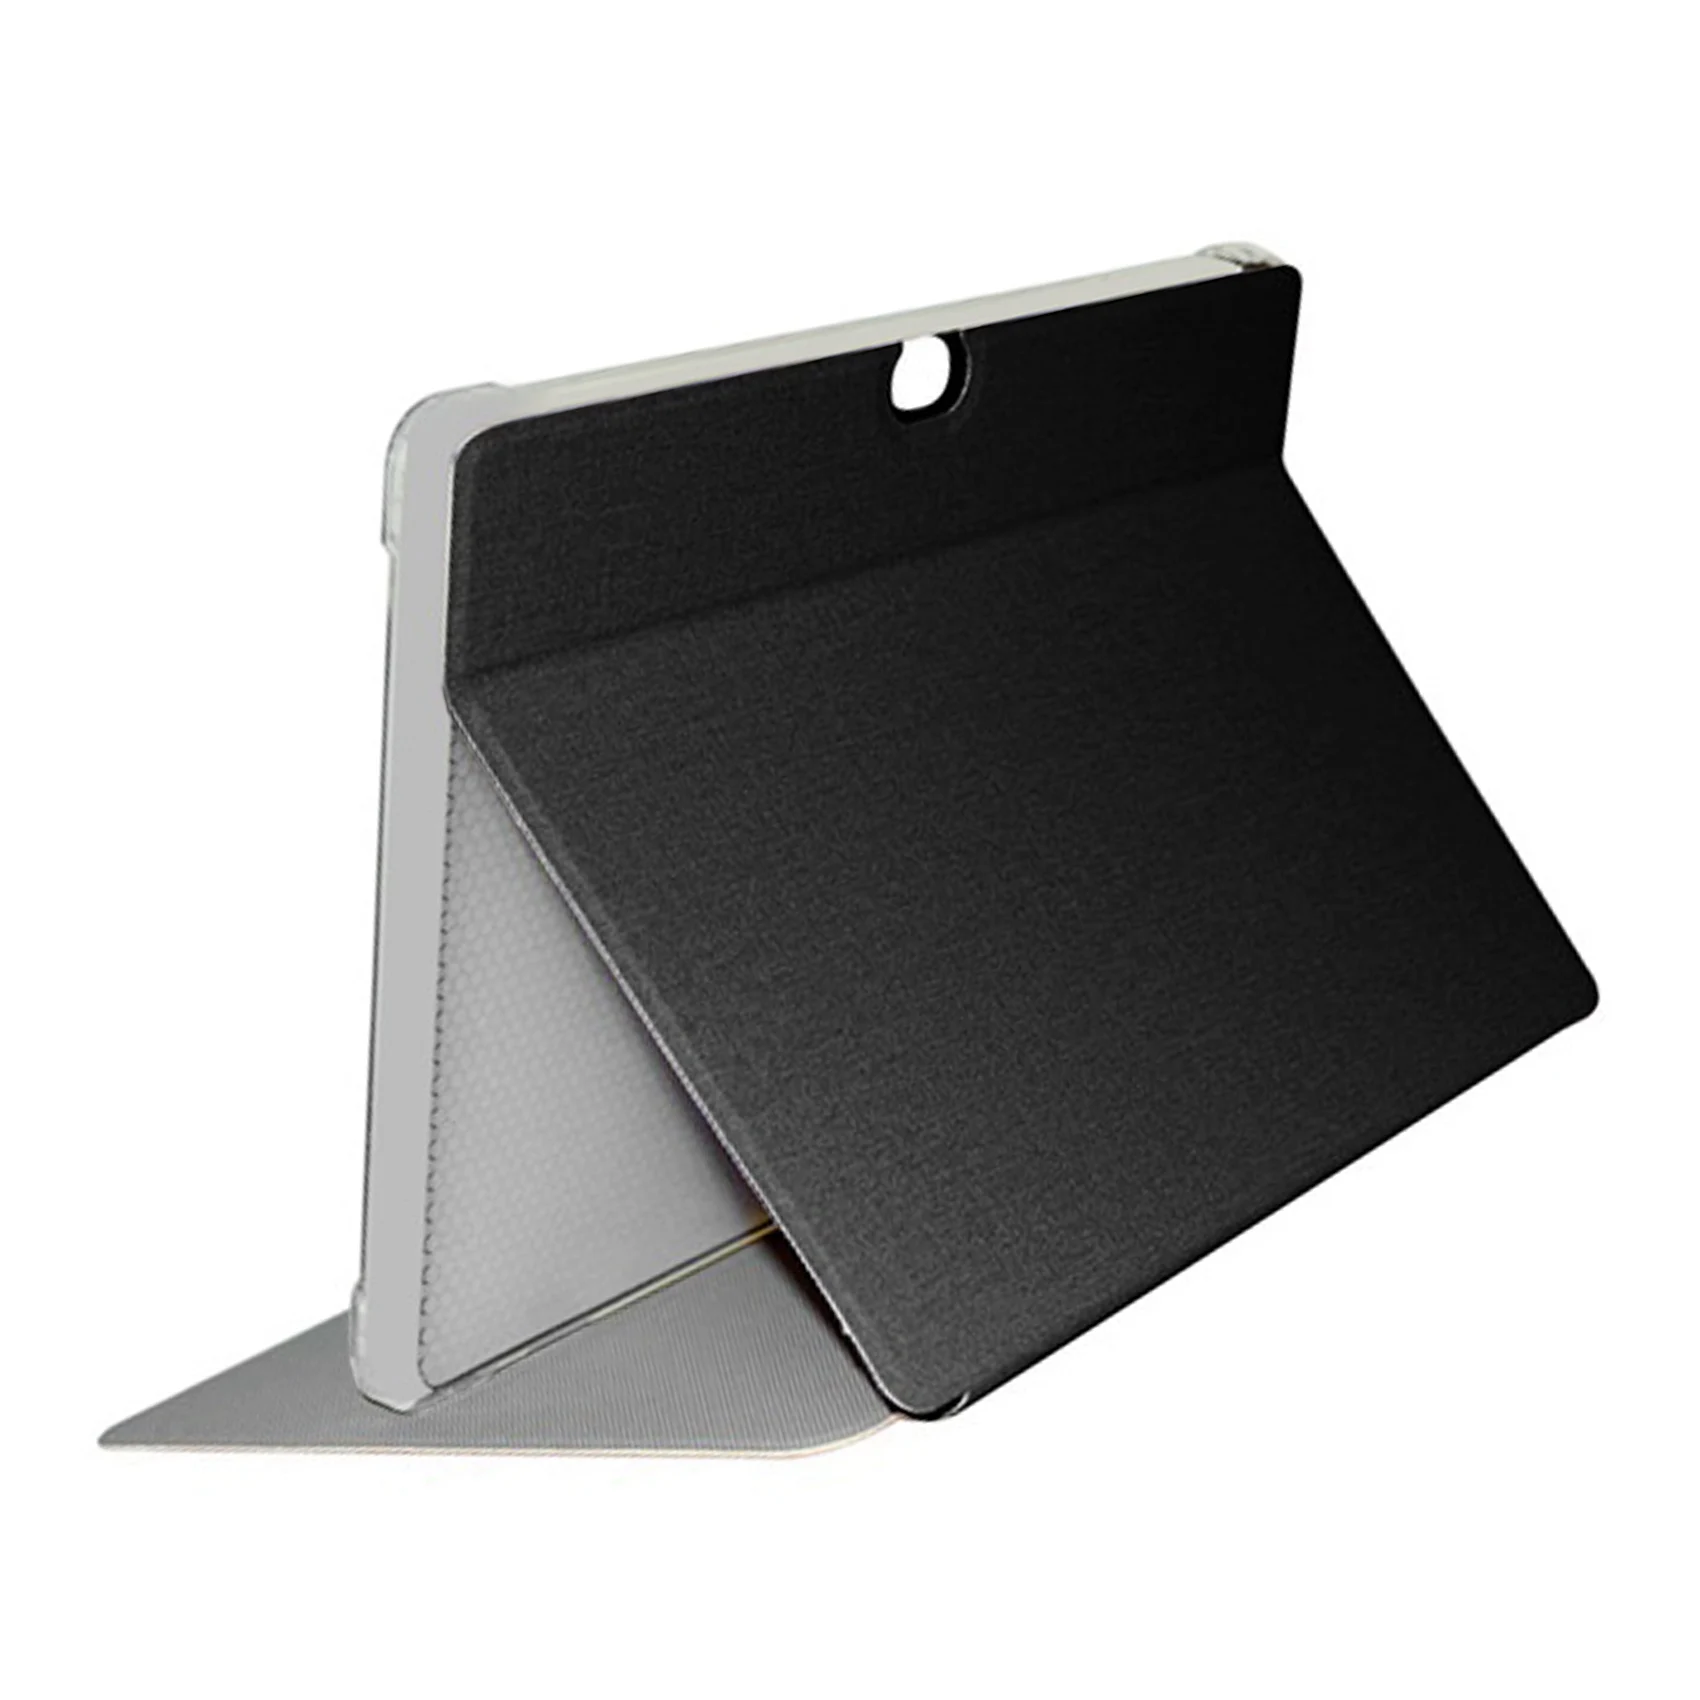 

Tablet Case For ALLDOCUBE Iplay20p Iplay20s 10.1 Inch PU Leather Case Tablet Stand For CUBE Iplay 20S